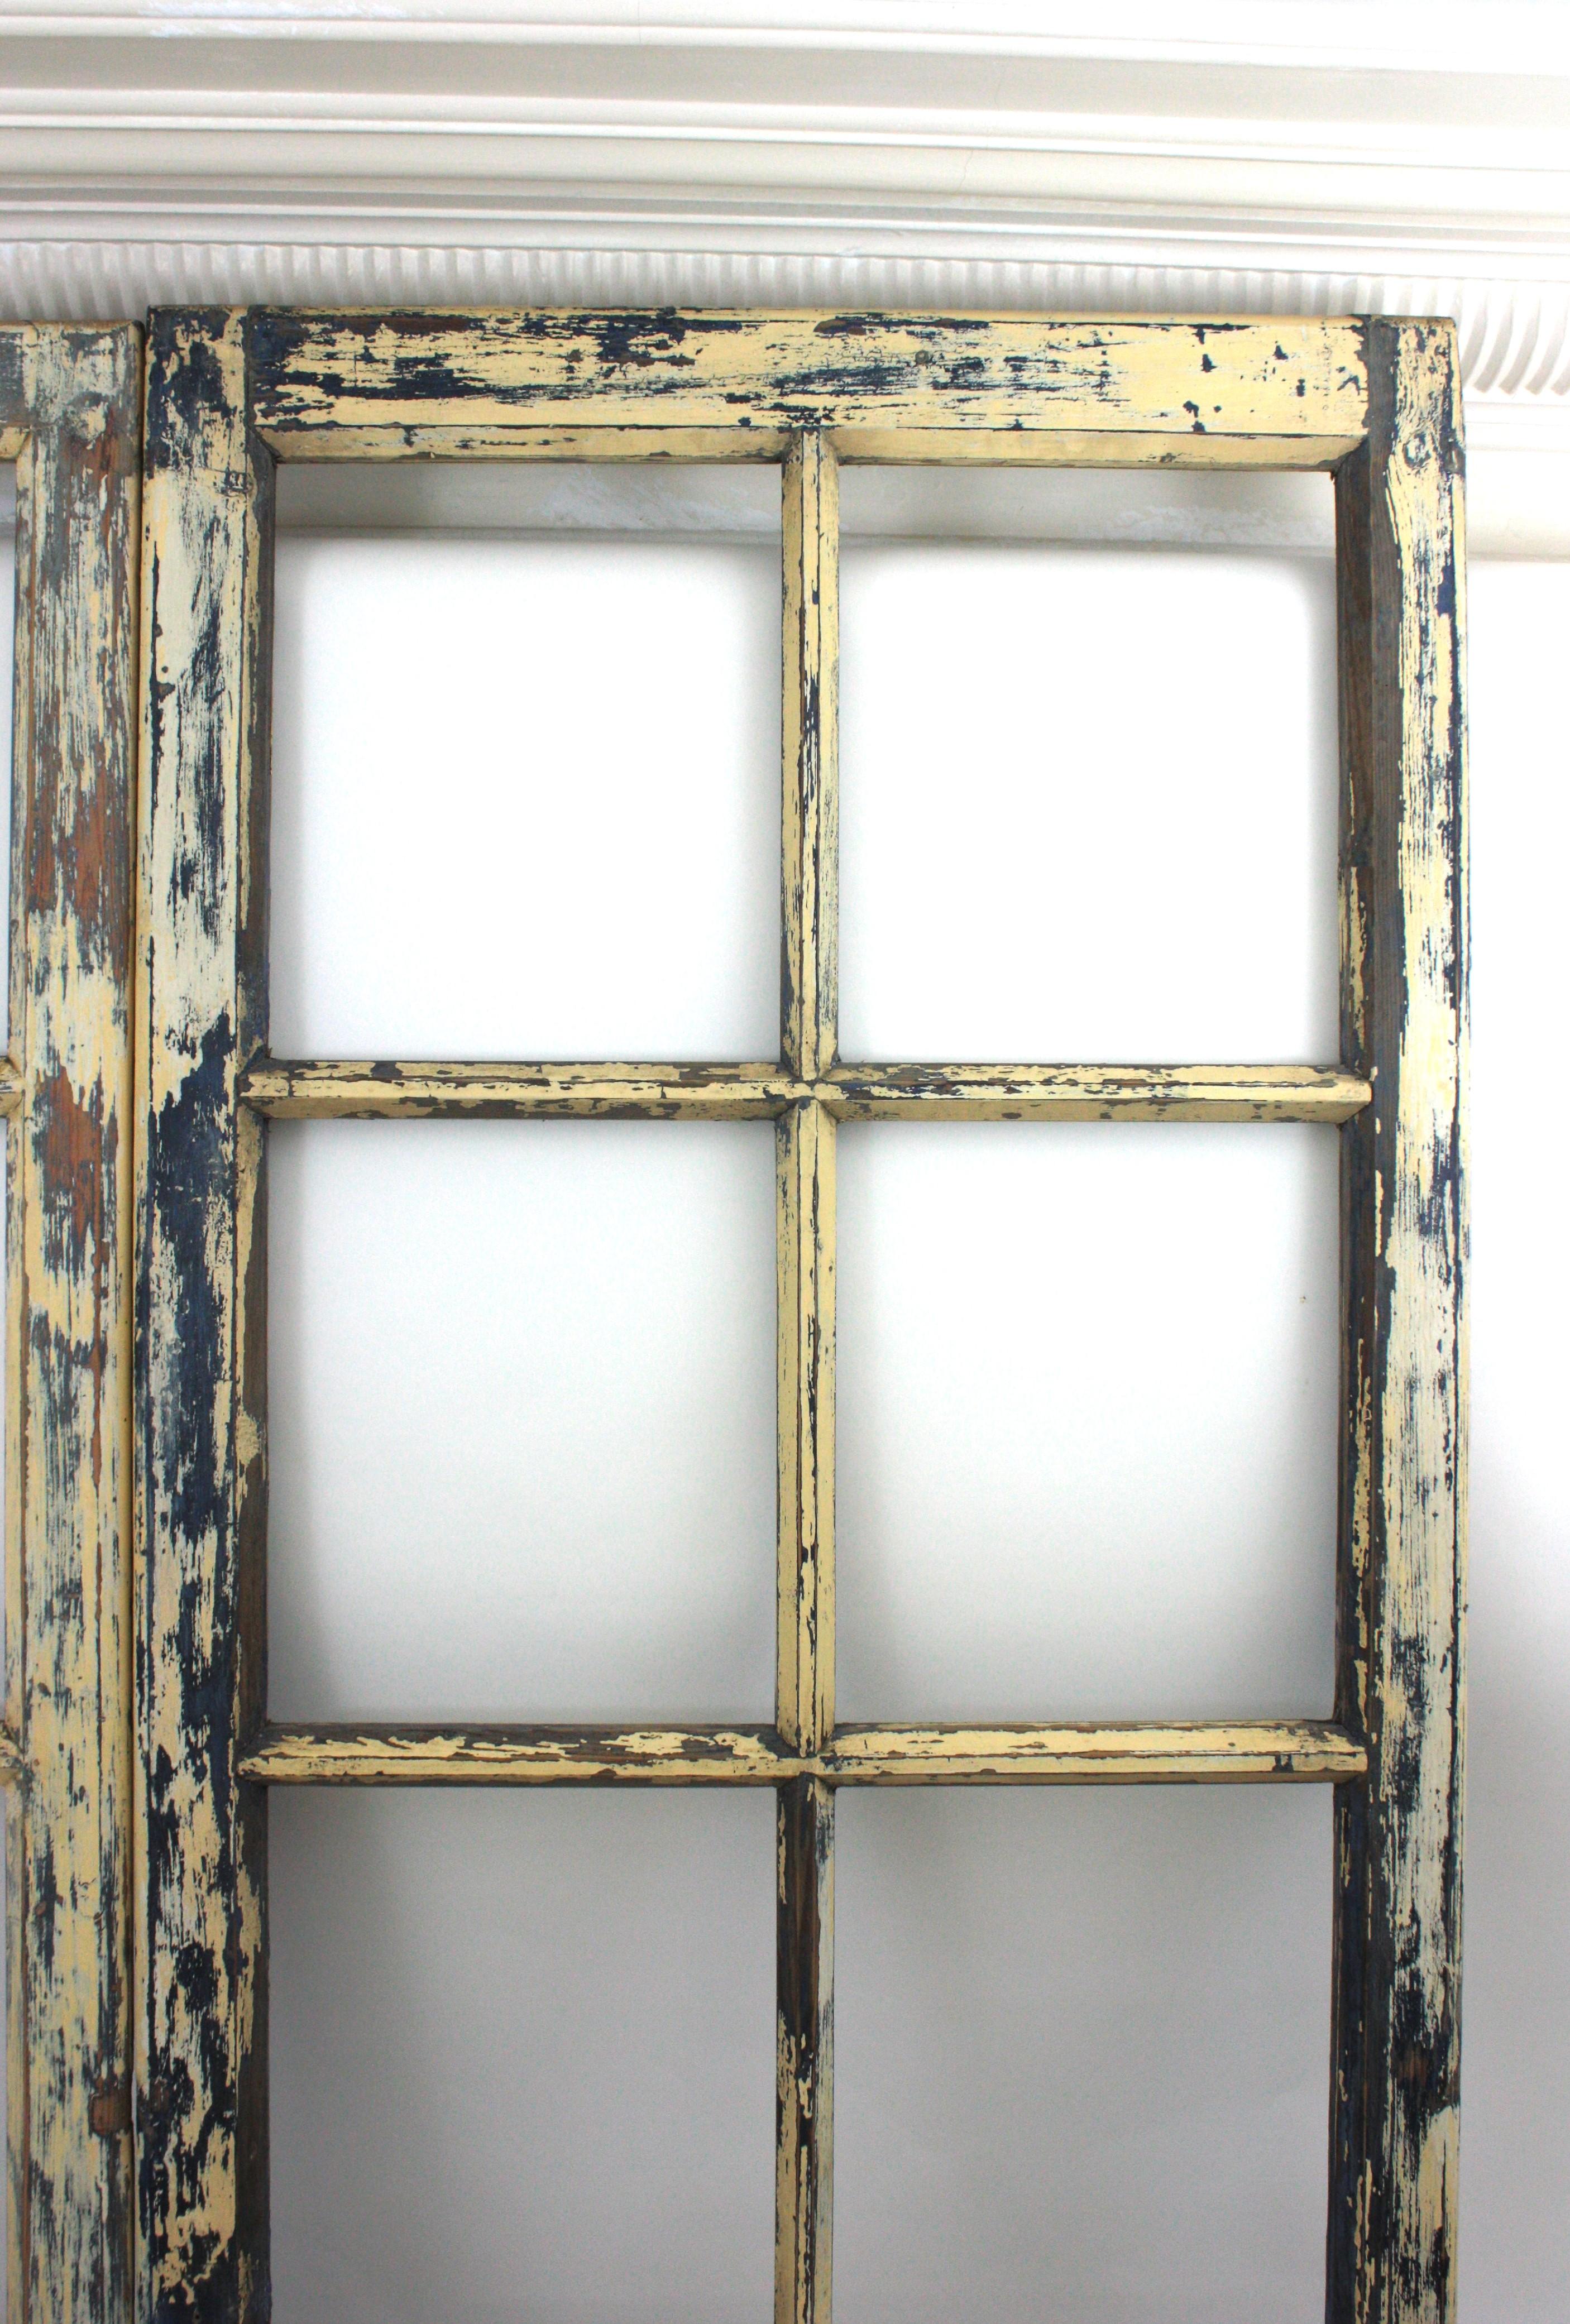 Pair of Industrial Paneled Wooden Doors or Windows For Sale 1